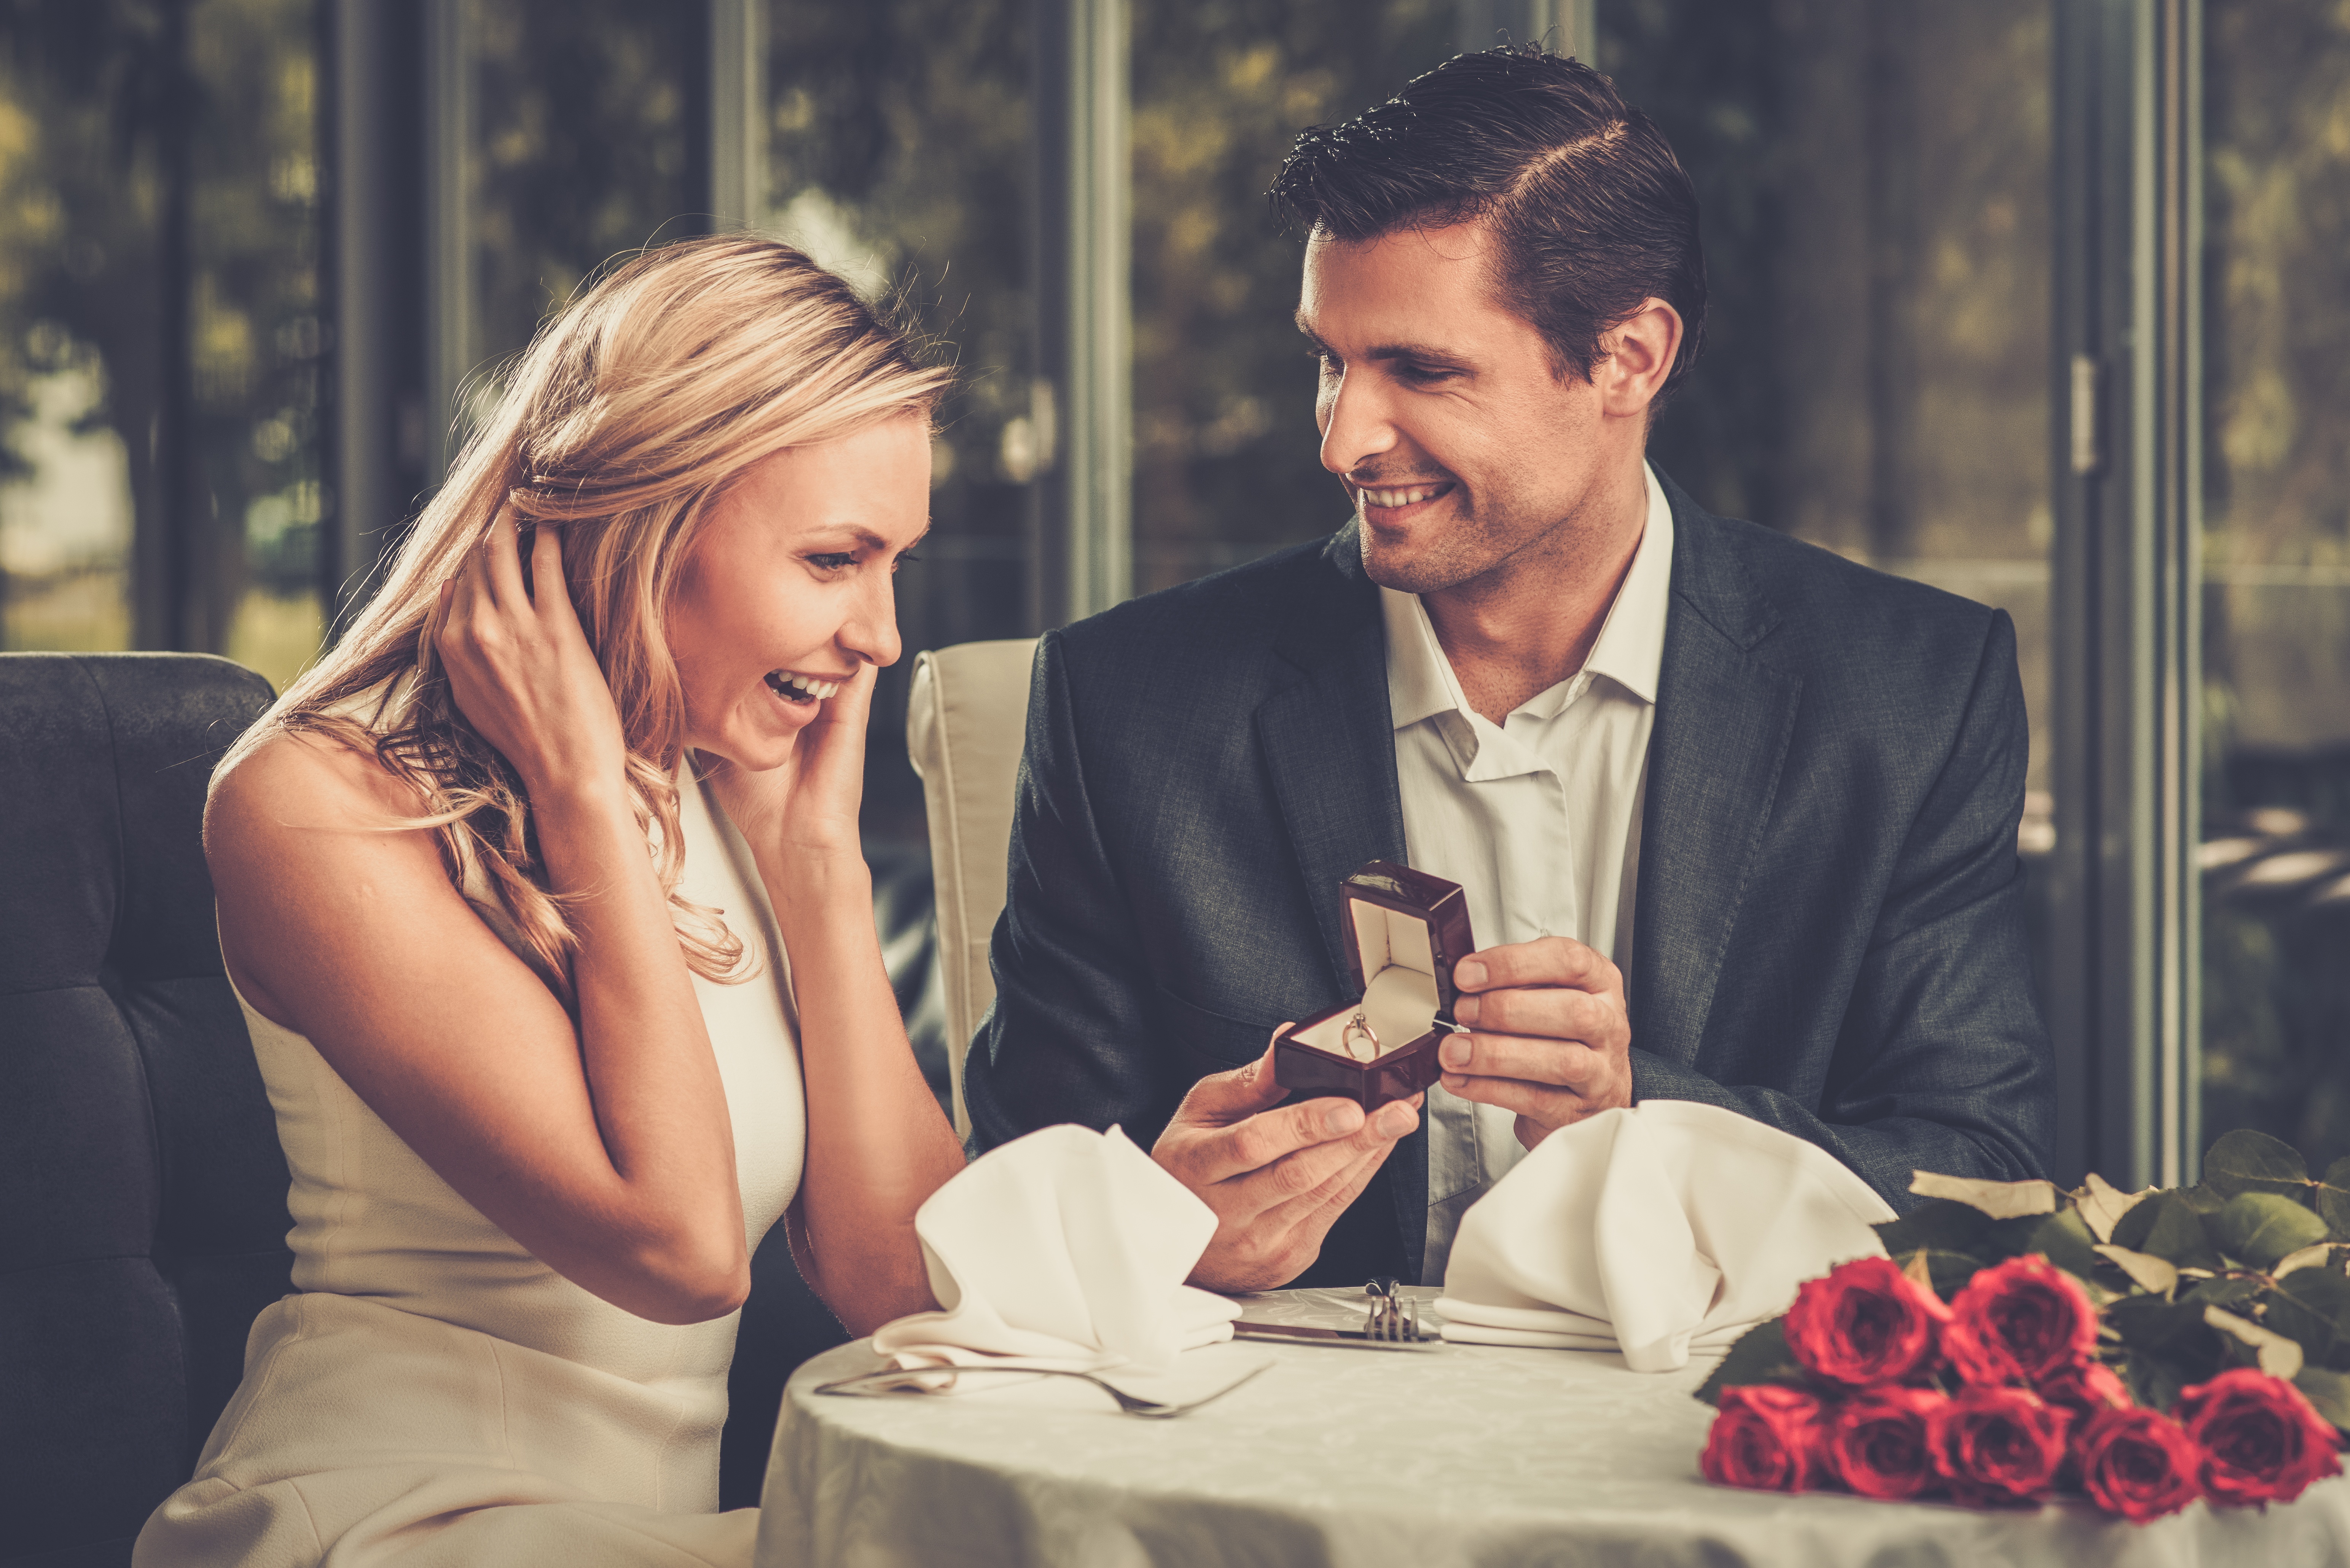 A man giving a woman a ring | Source: Shutterstock